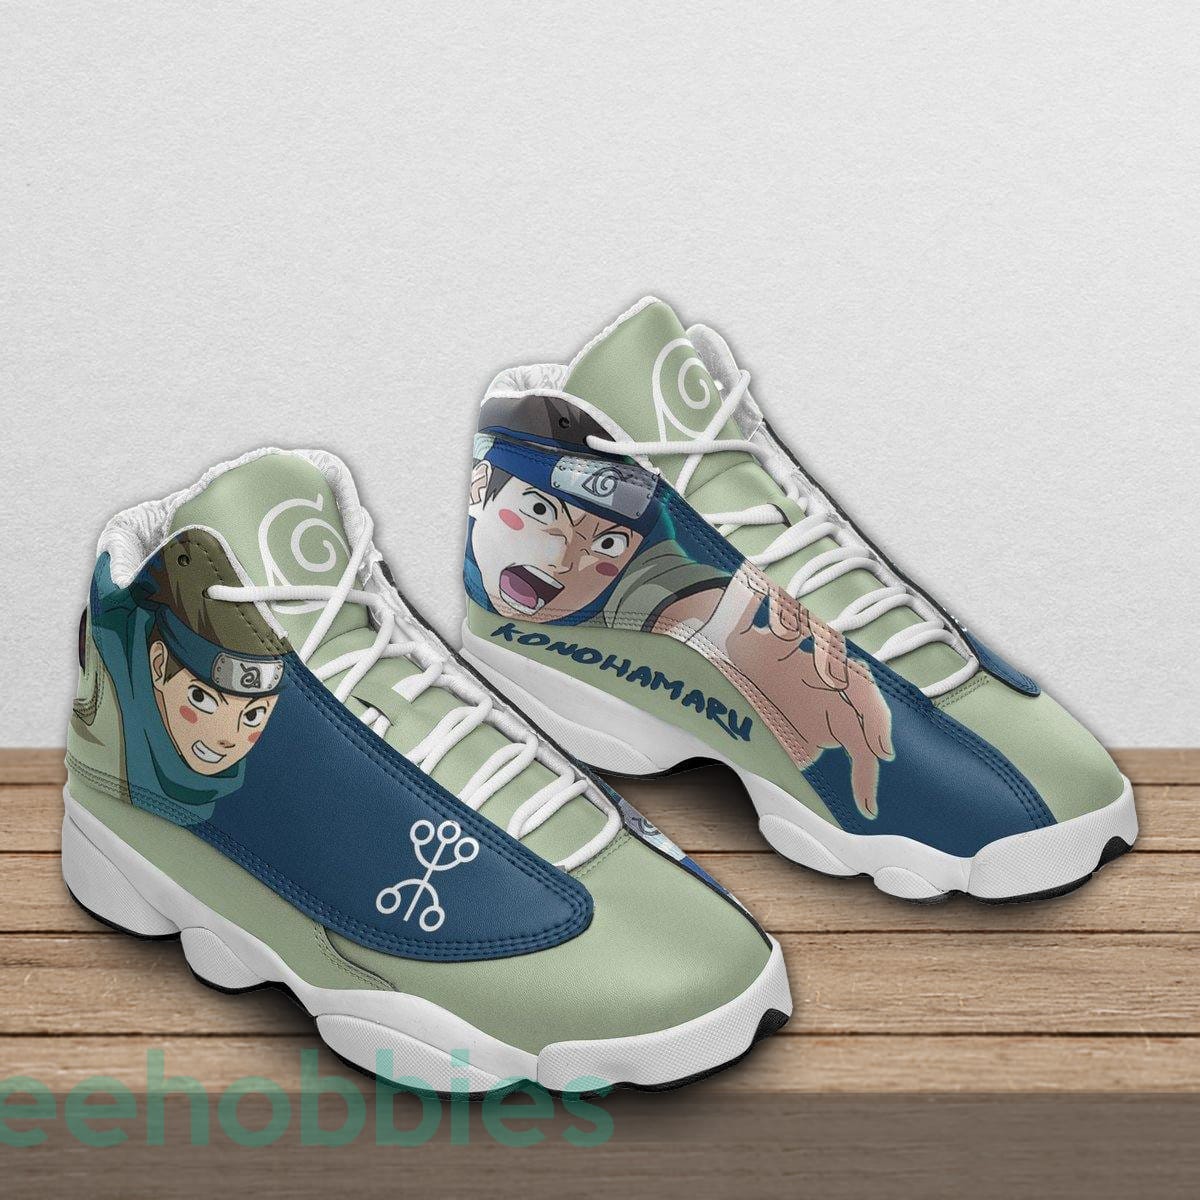 Konohamaru Custom Nrt Anime Air Jordan 13 Shoes Product photo 2